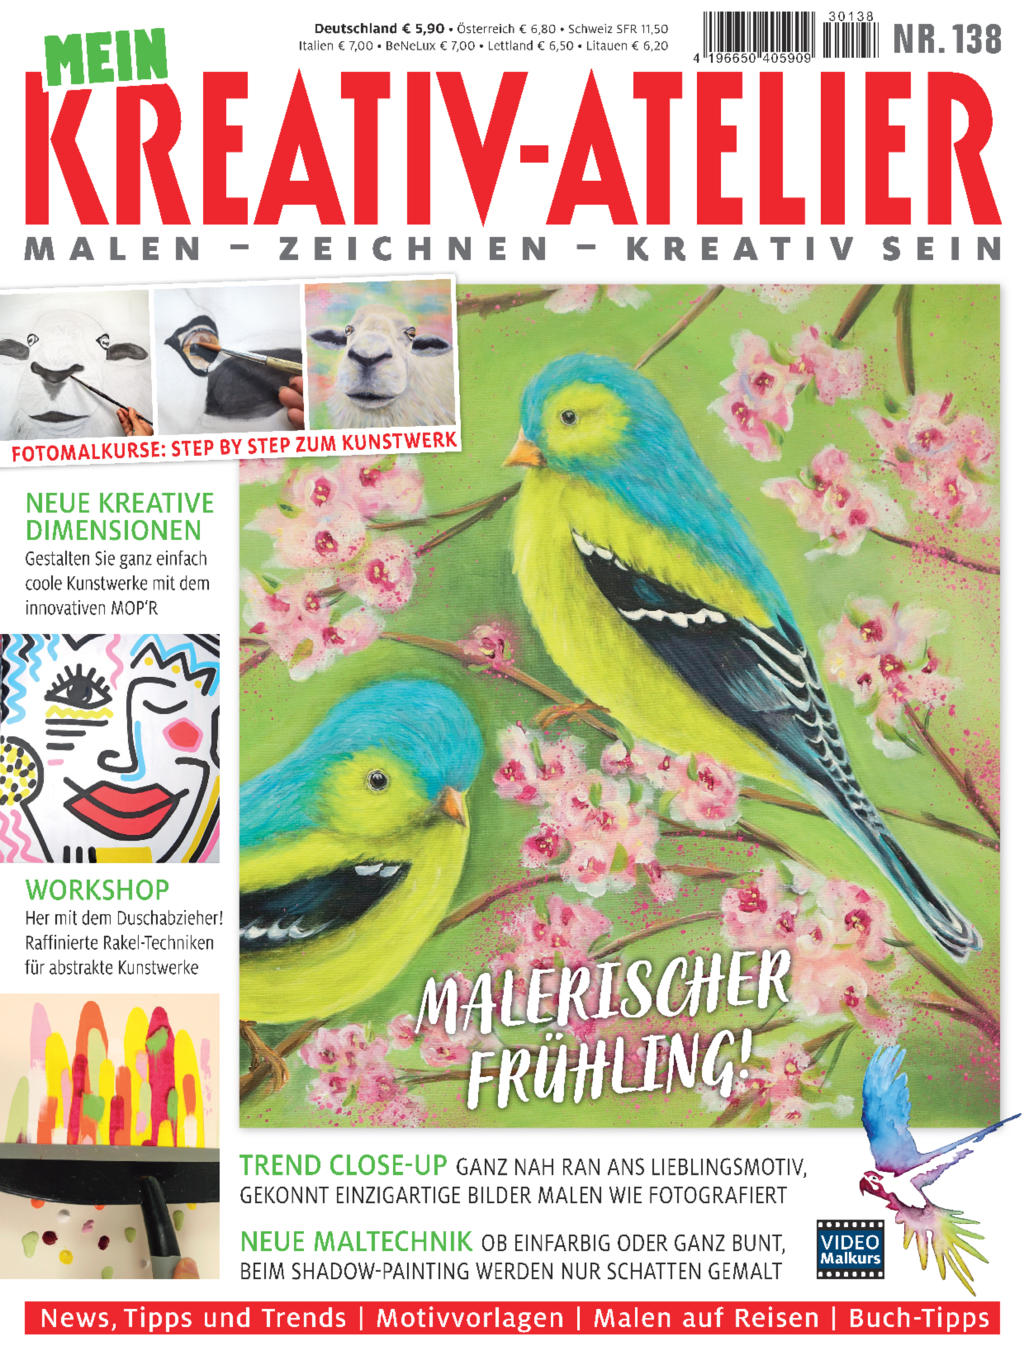 E-Paper: Mein Kreativ-Atelier Nr. 138 - Malerischer Frühling!